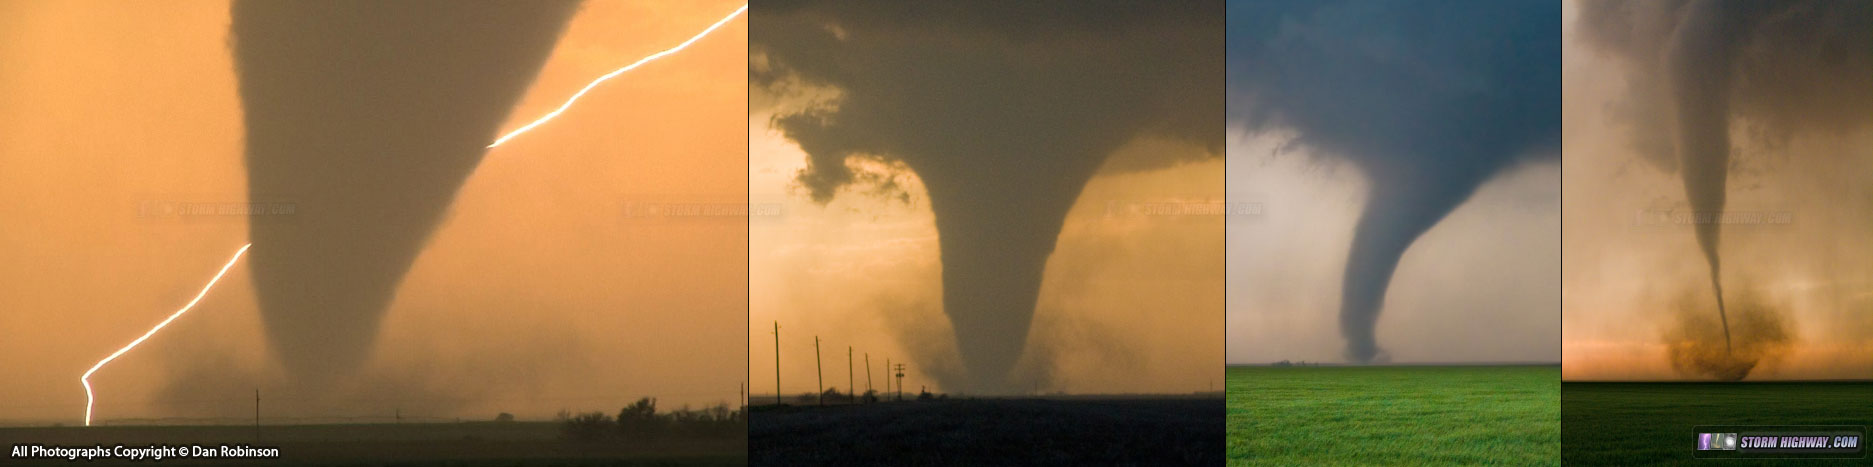 Tornadoes at Rozel and Sanford, Kansas on May 18, 2013